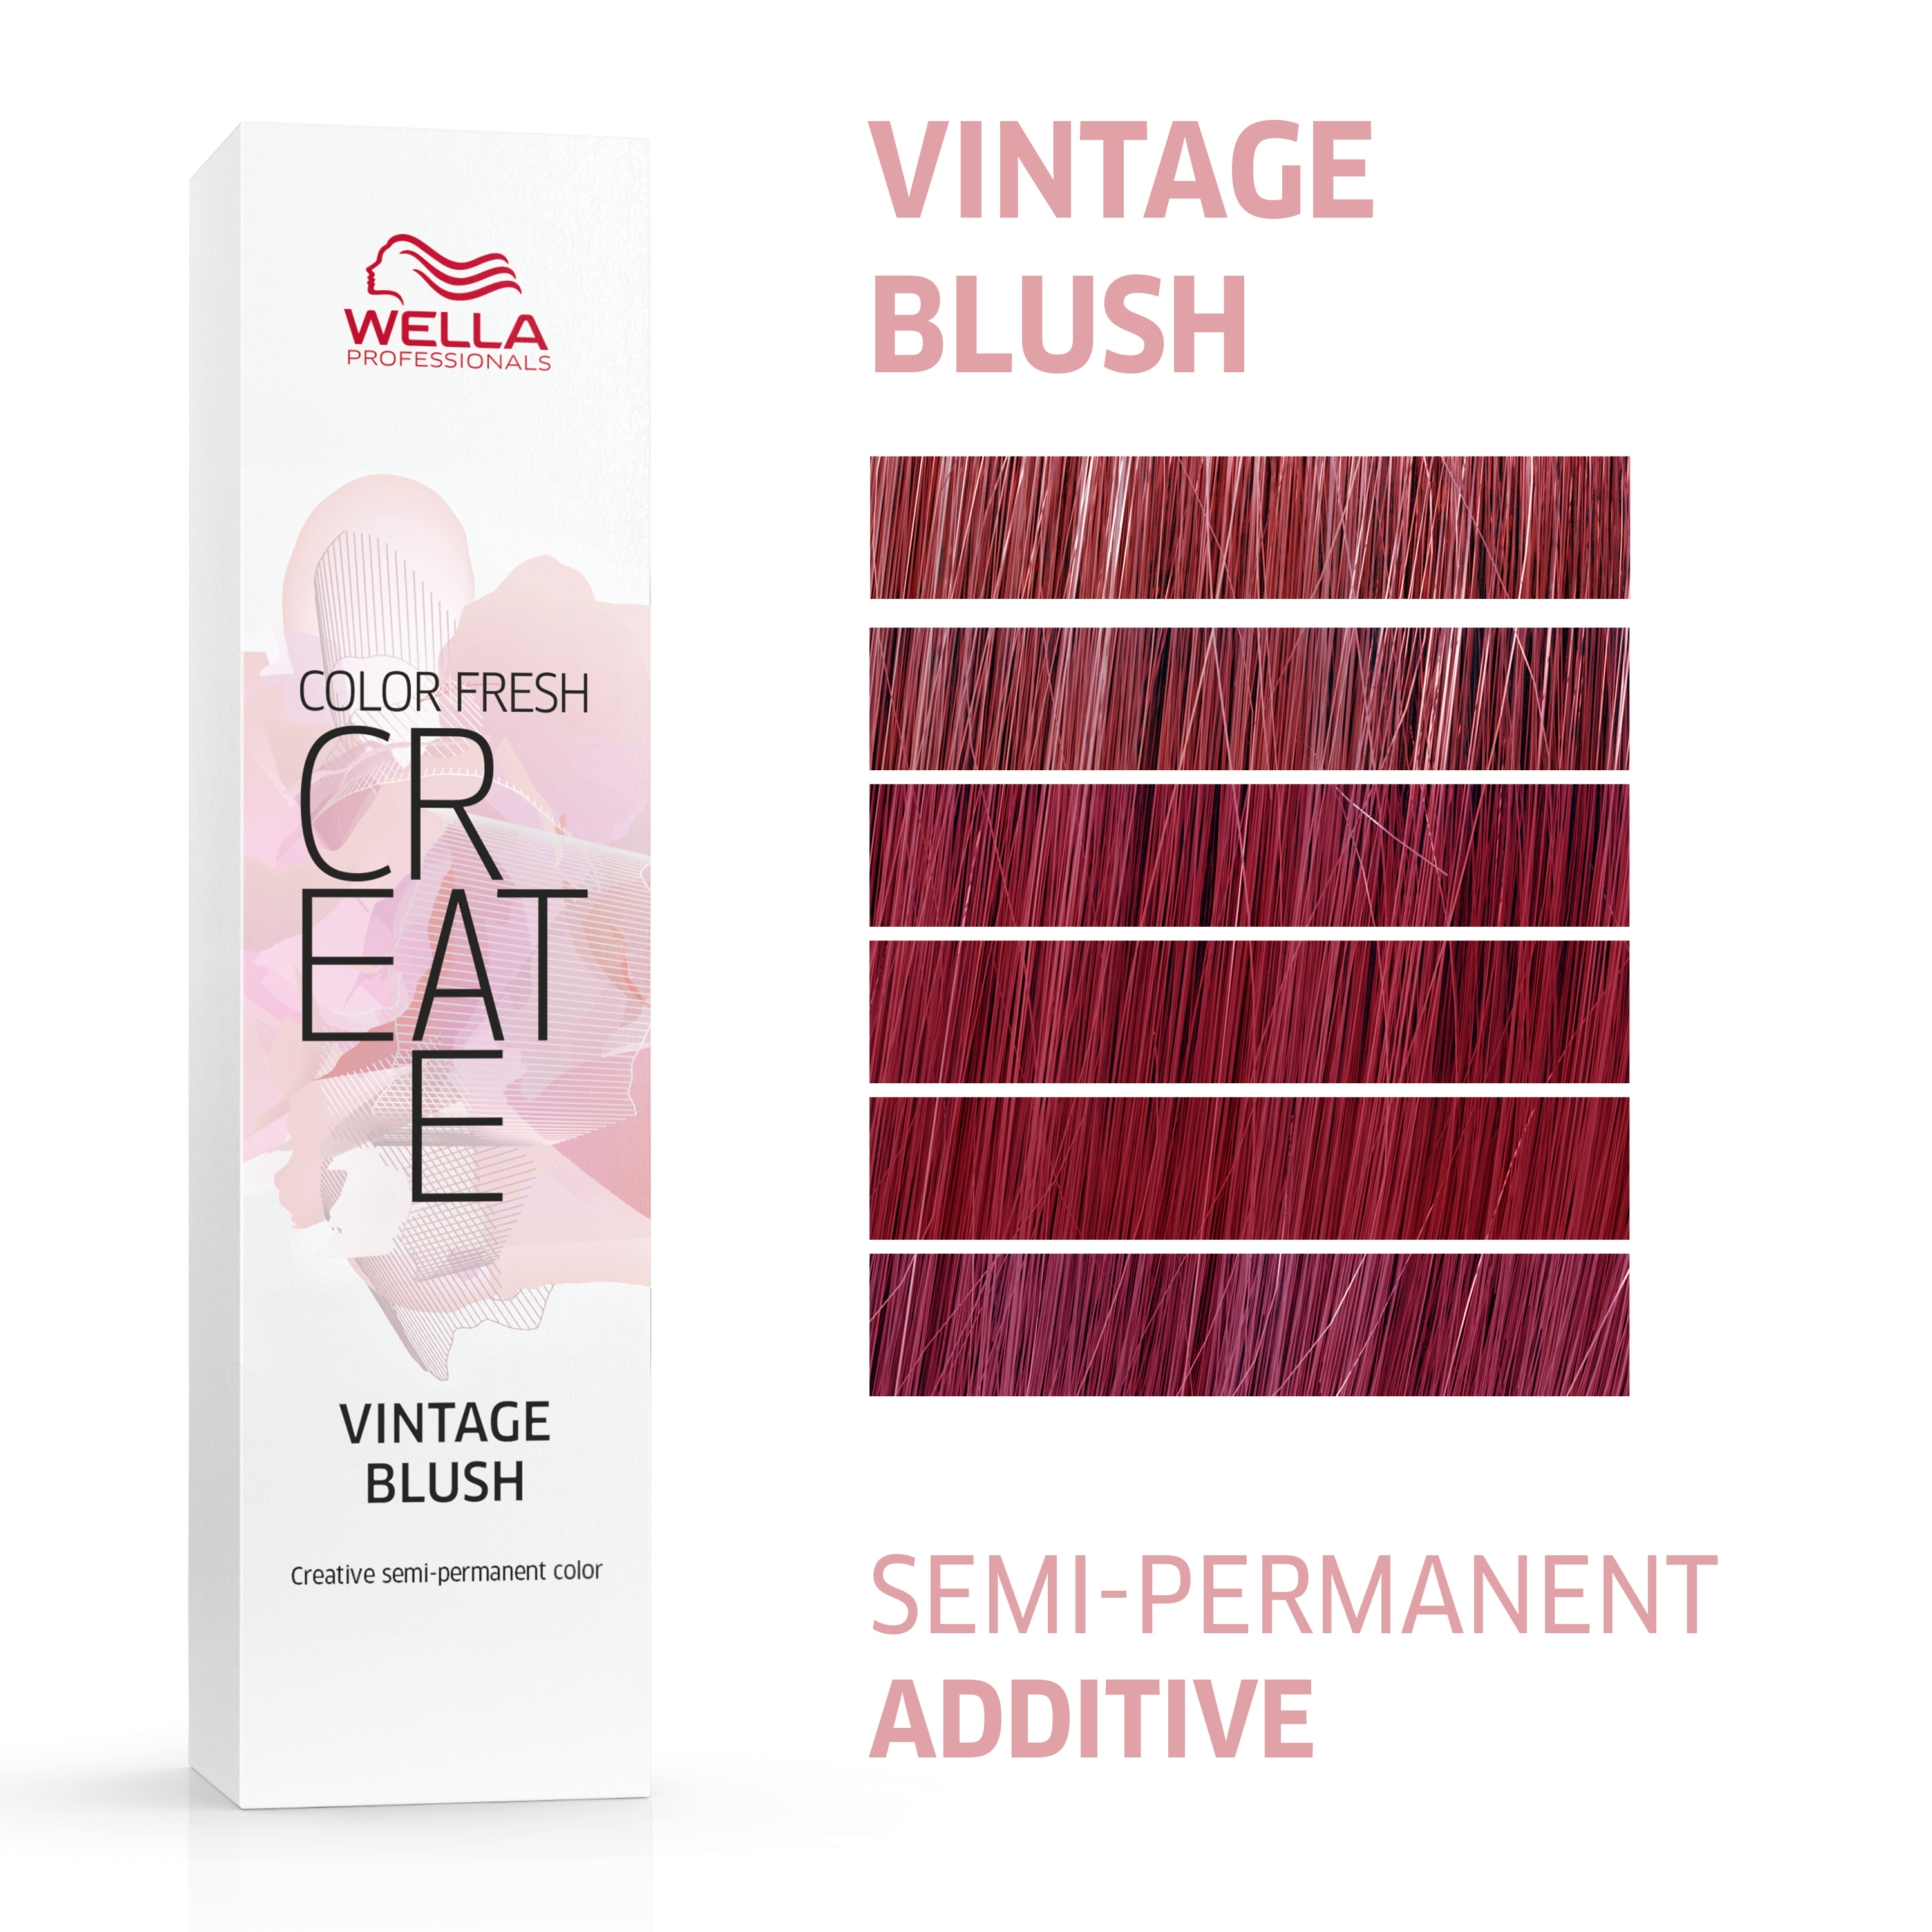 Wella Color Fresh Create Vintage Blush 60ml